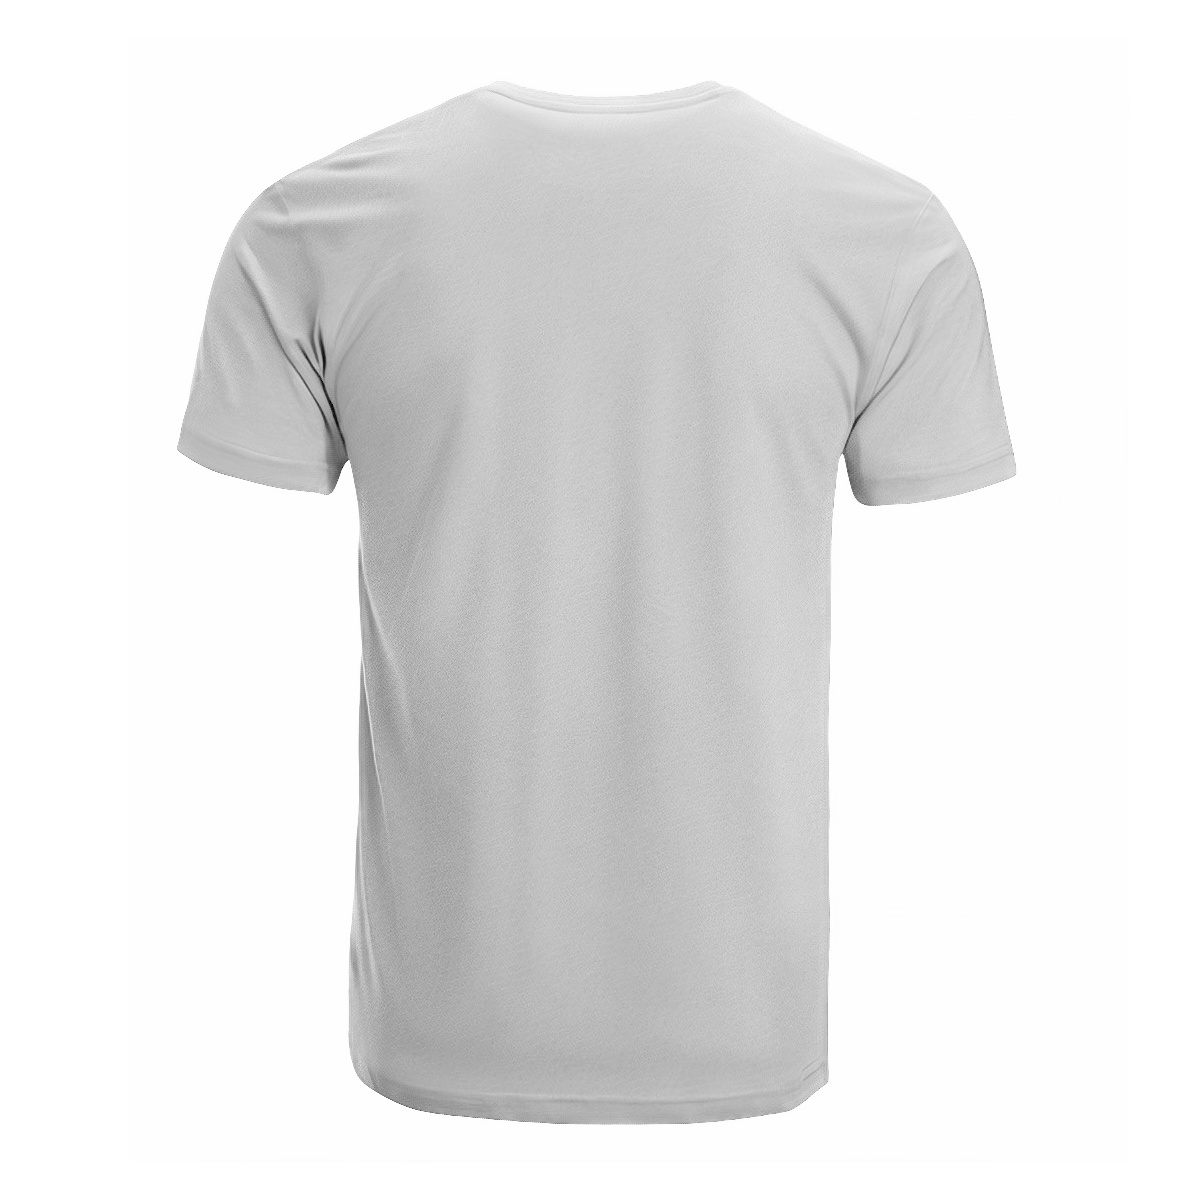 Turner Tartan Crest T-shirt - I'm not yelling style